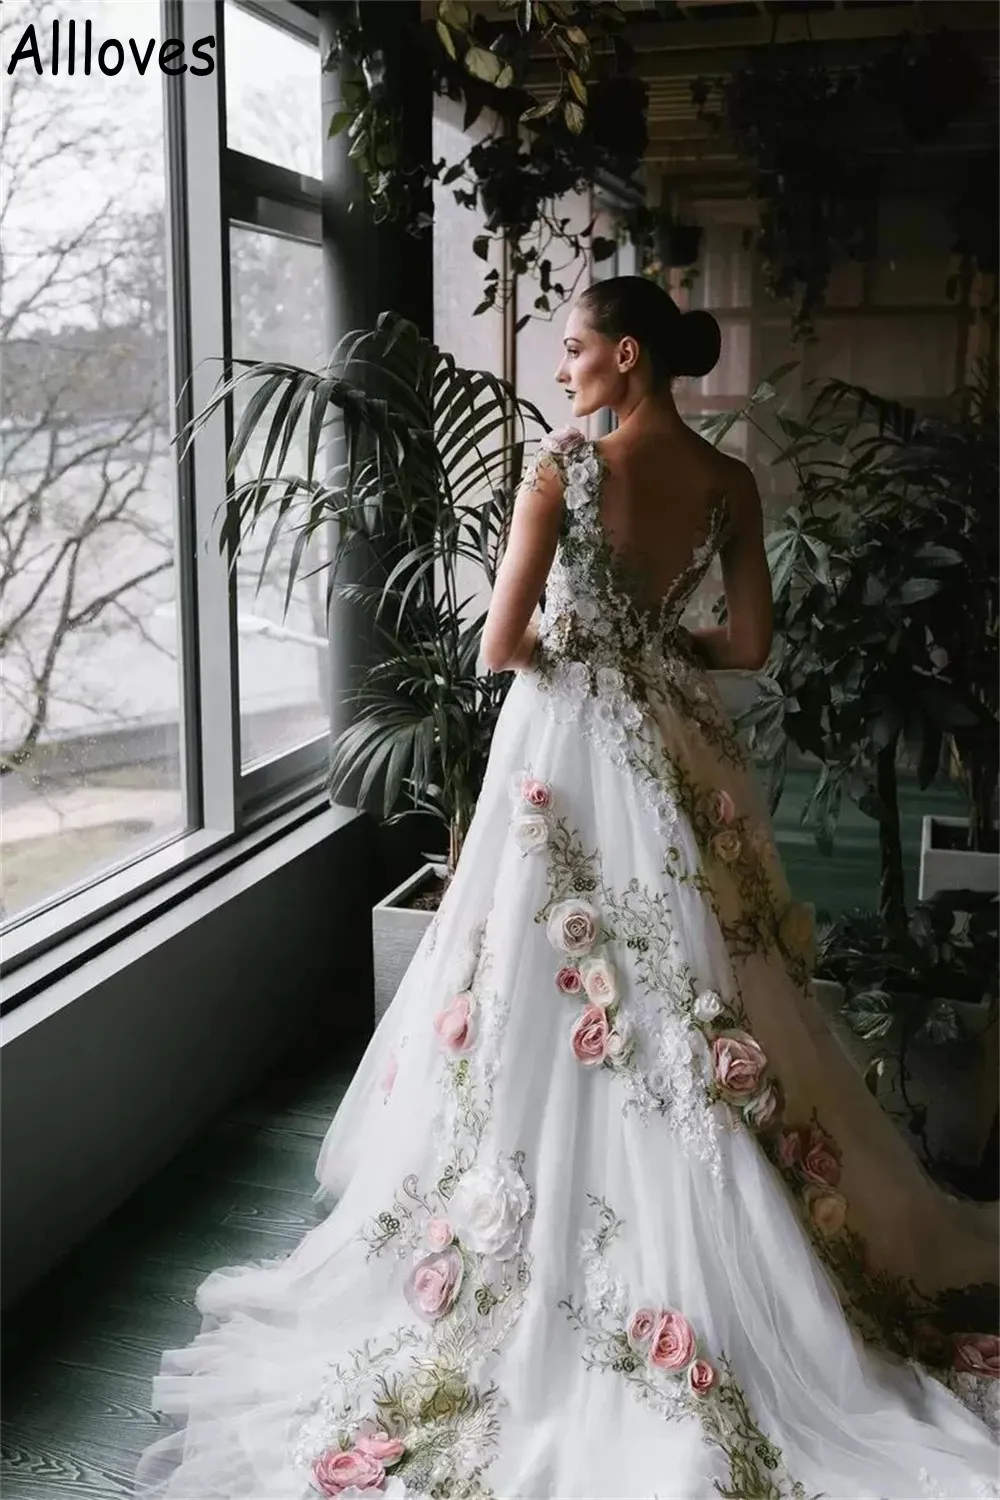 Floral Wedding Dresses: 39 Magical Looks + Faqs | Wedding dresses with  flowers, Colored wedding dresses, Floral wedding dress